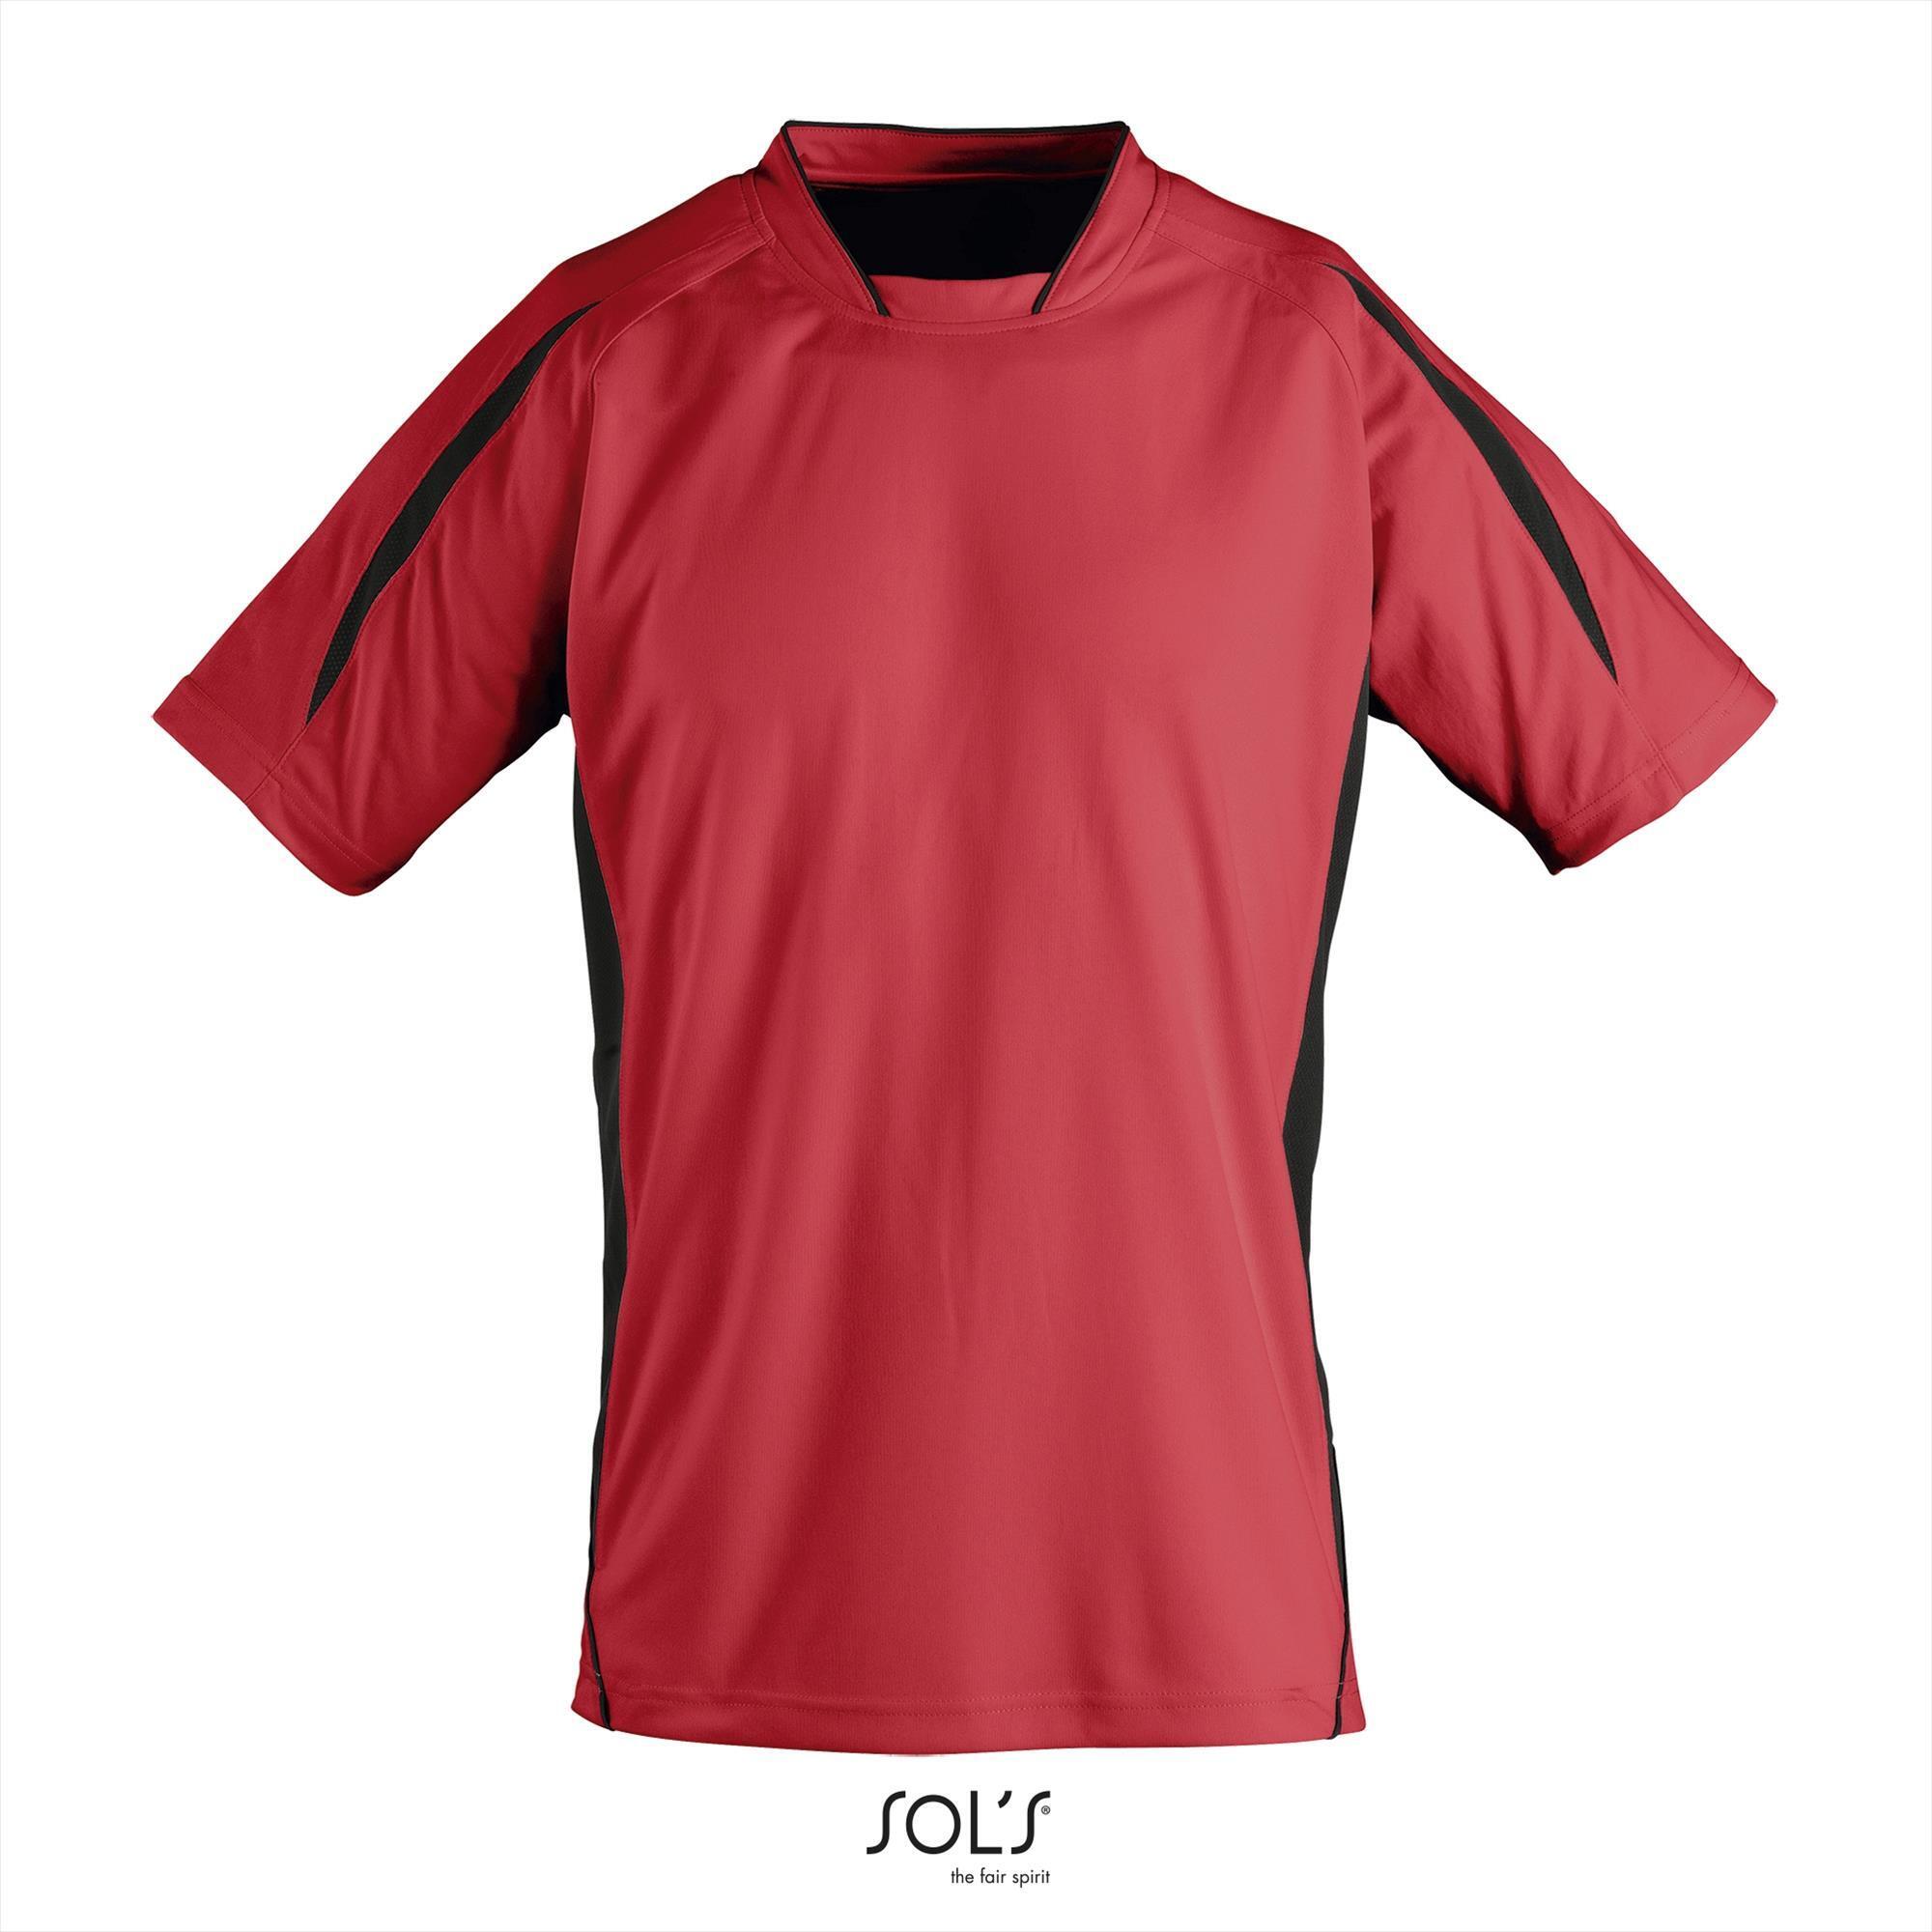 Kinder sportshirt rood met zwart sportief sport shirt personaliseren sport shirt